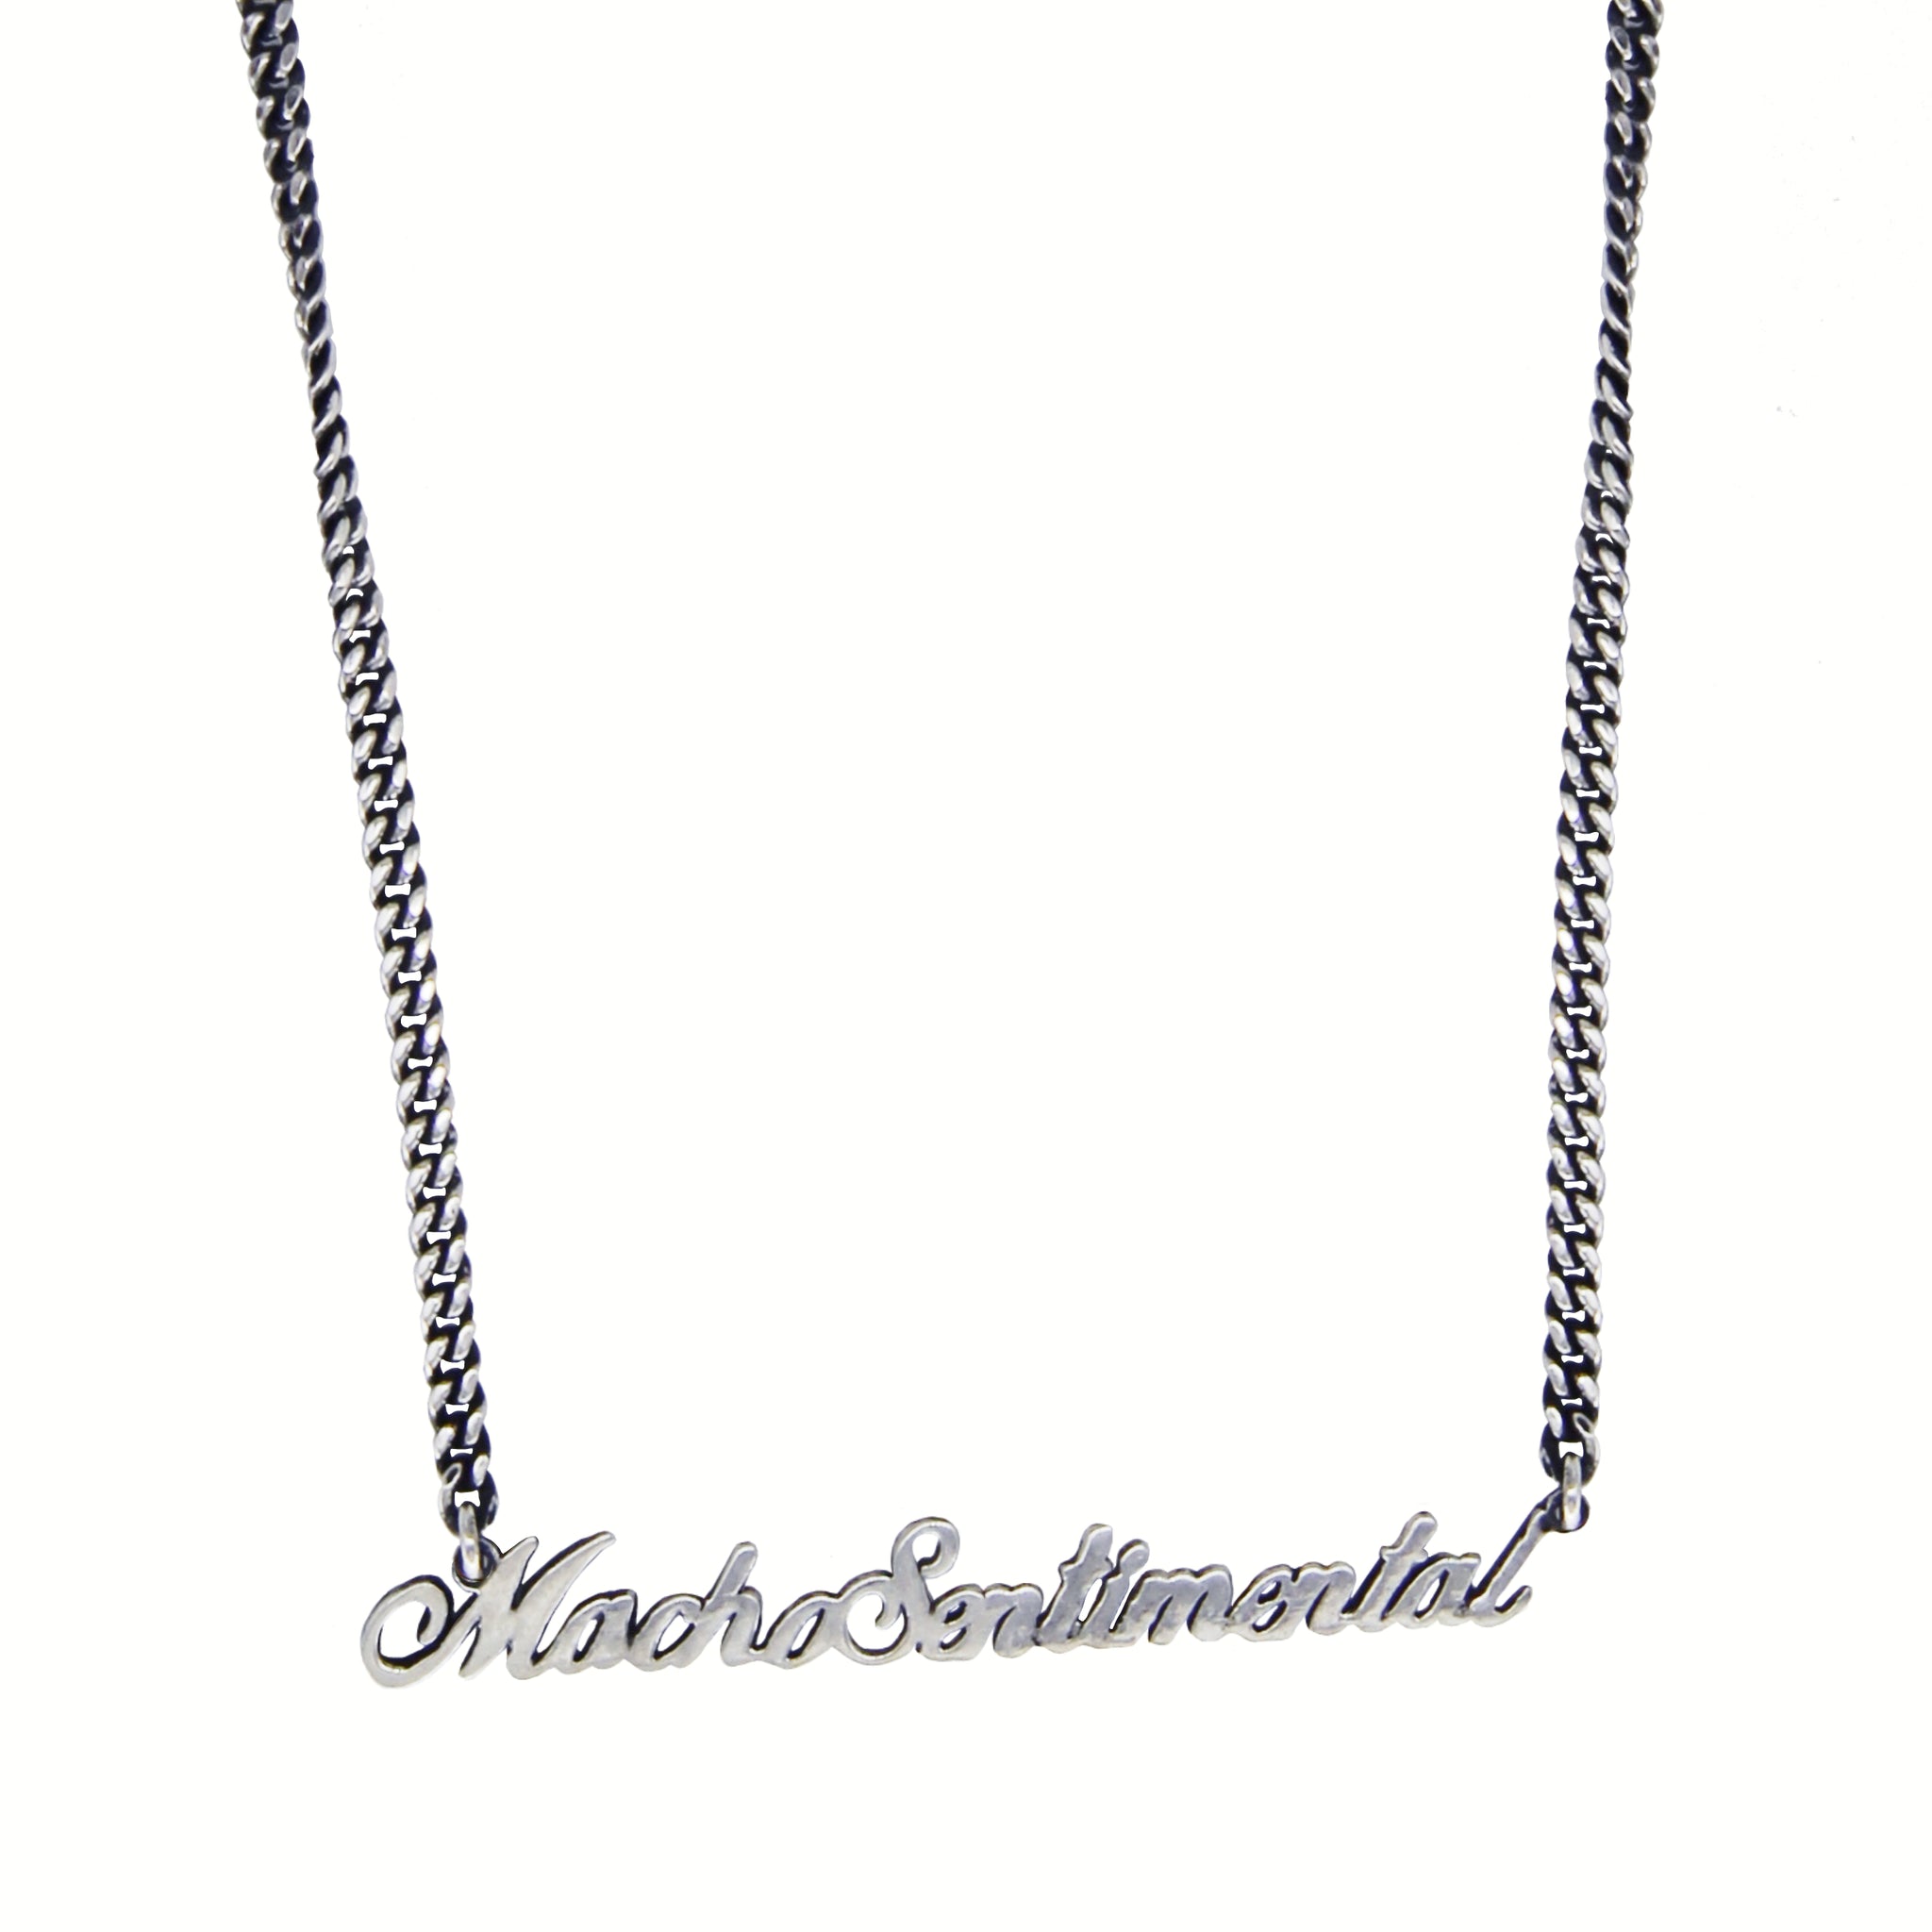 Macho Sentimental Necklace - Sterling Silver